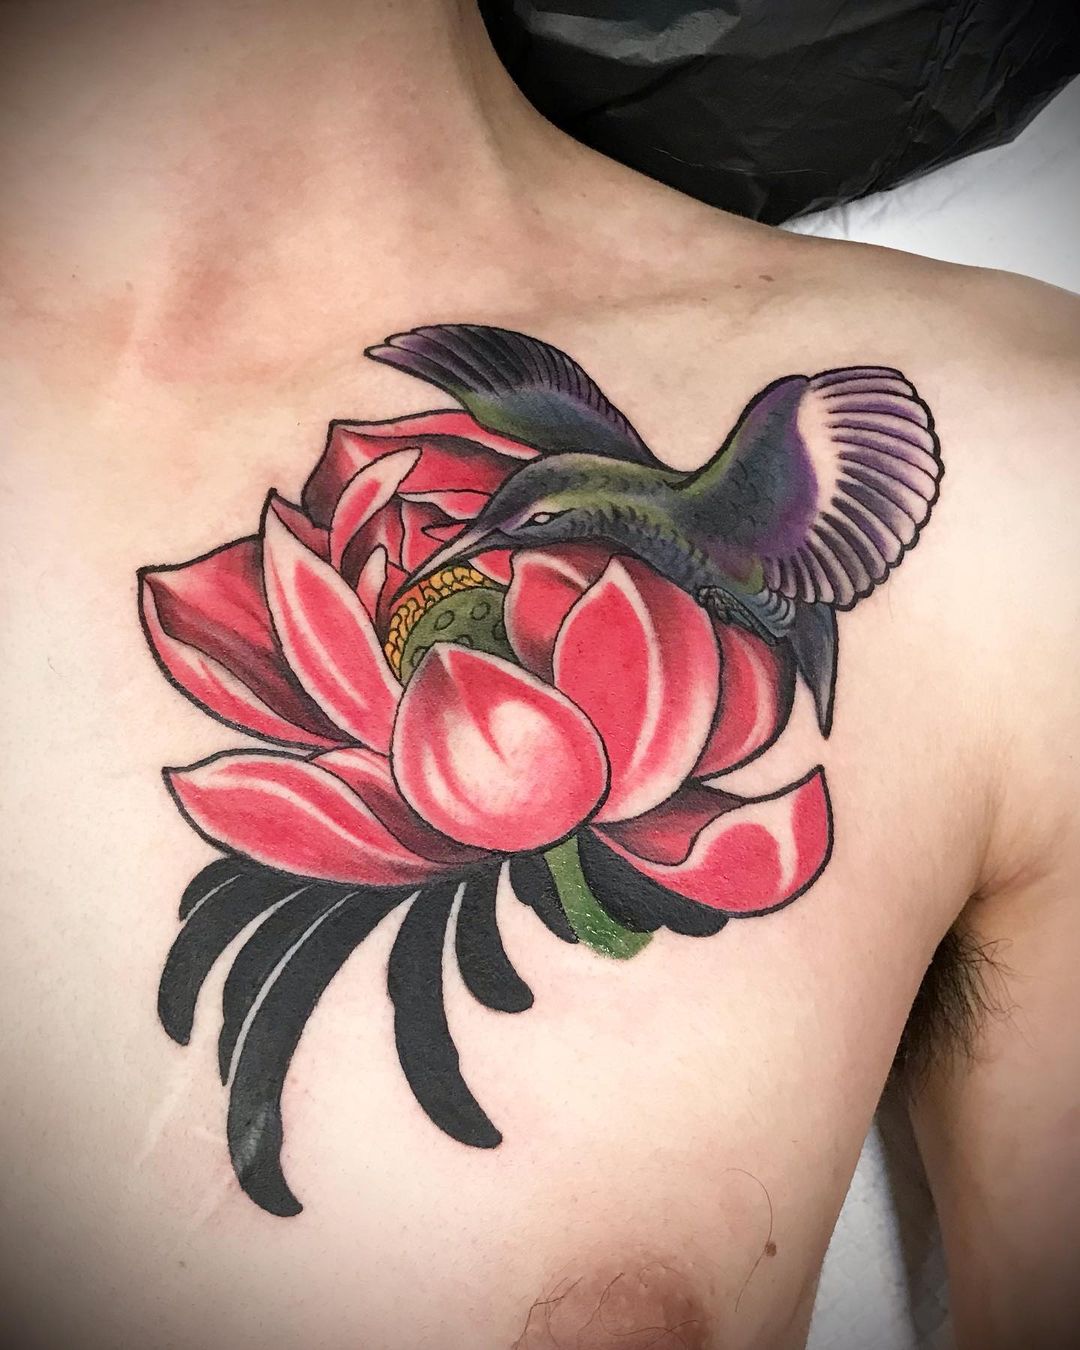 Pecho, brillante, tatuaje de colibrí zumbador.